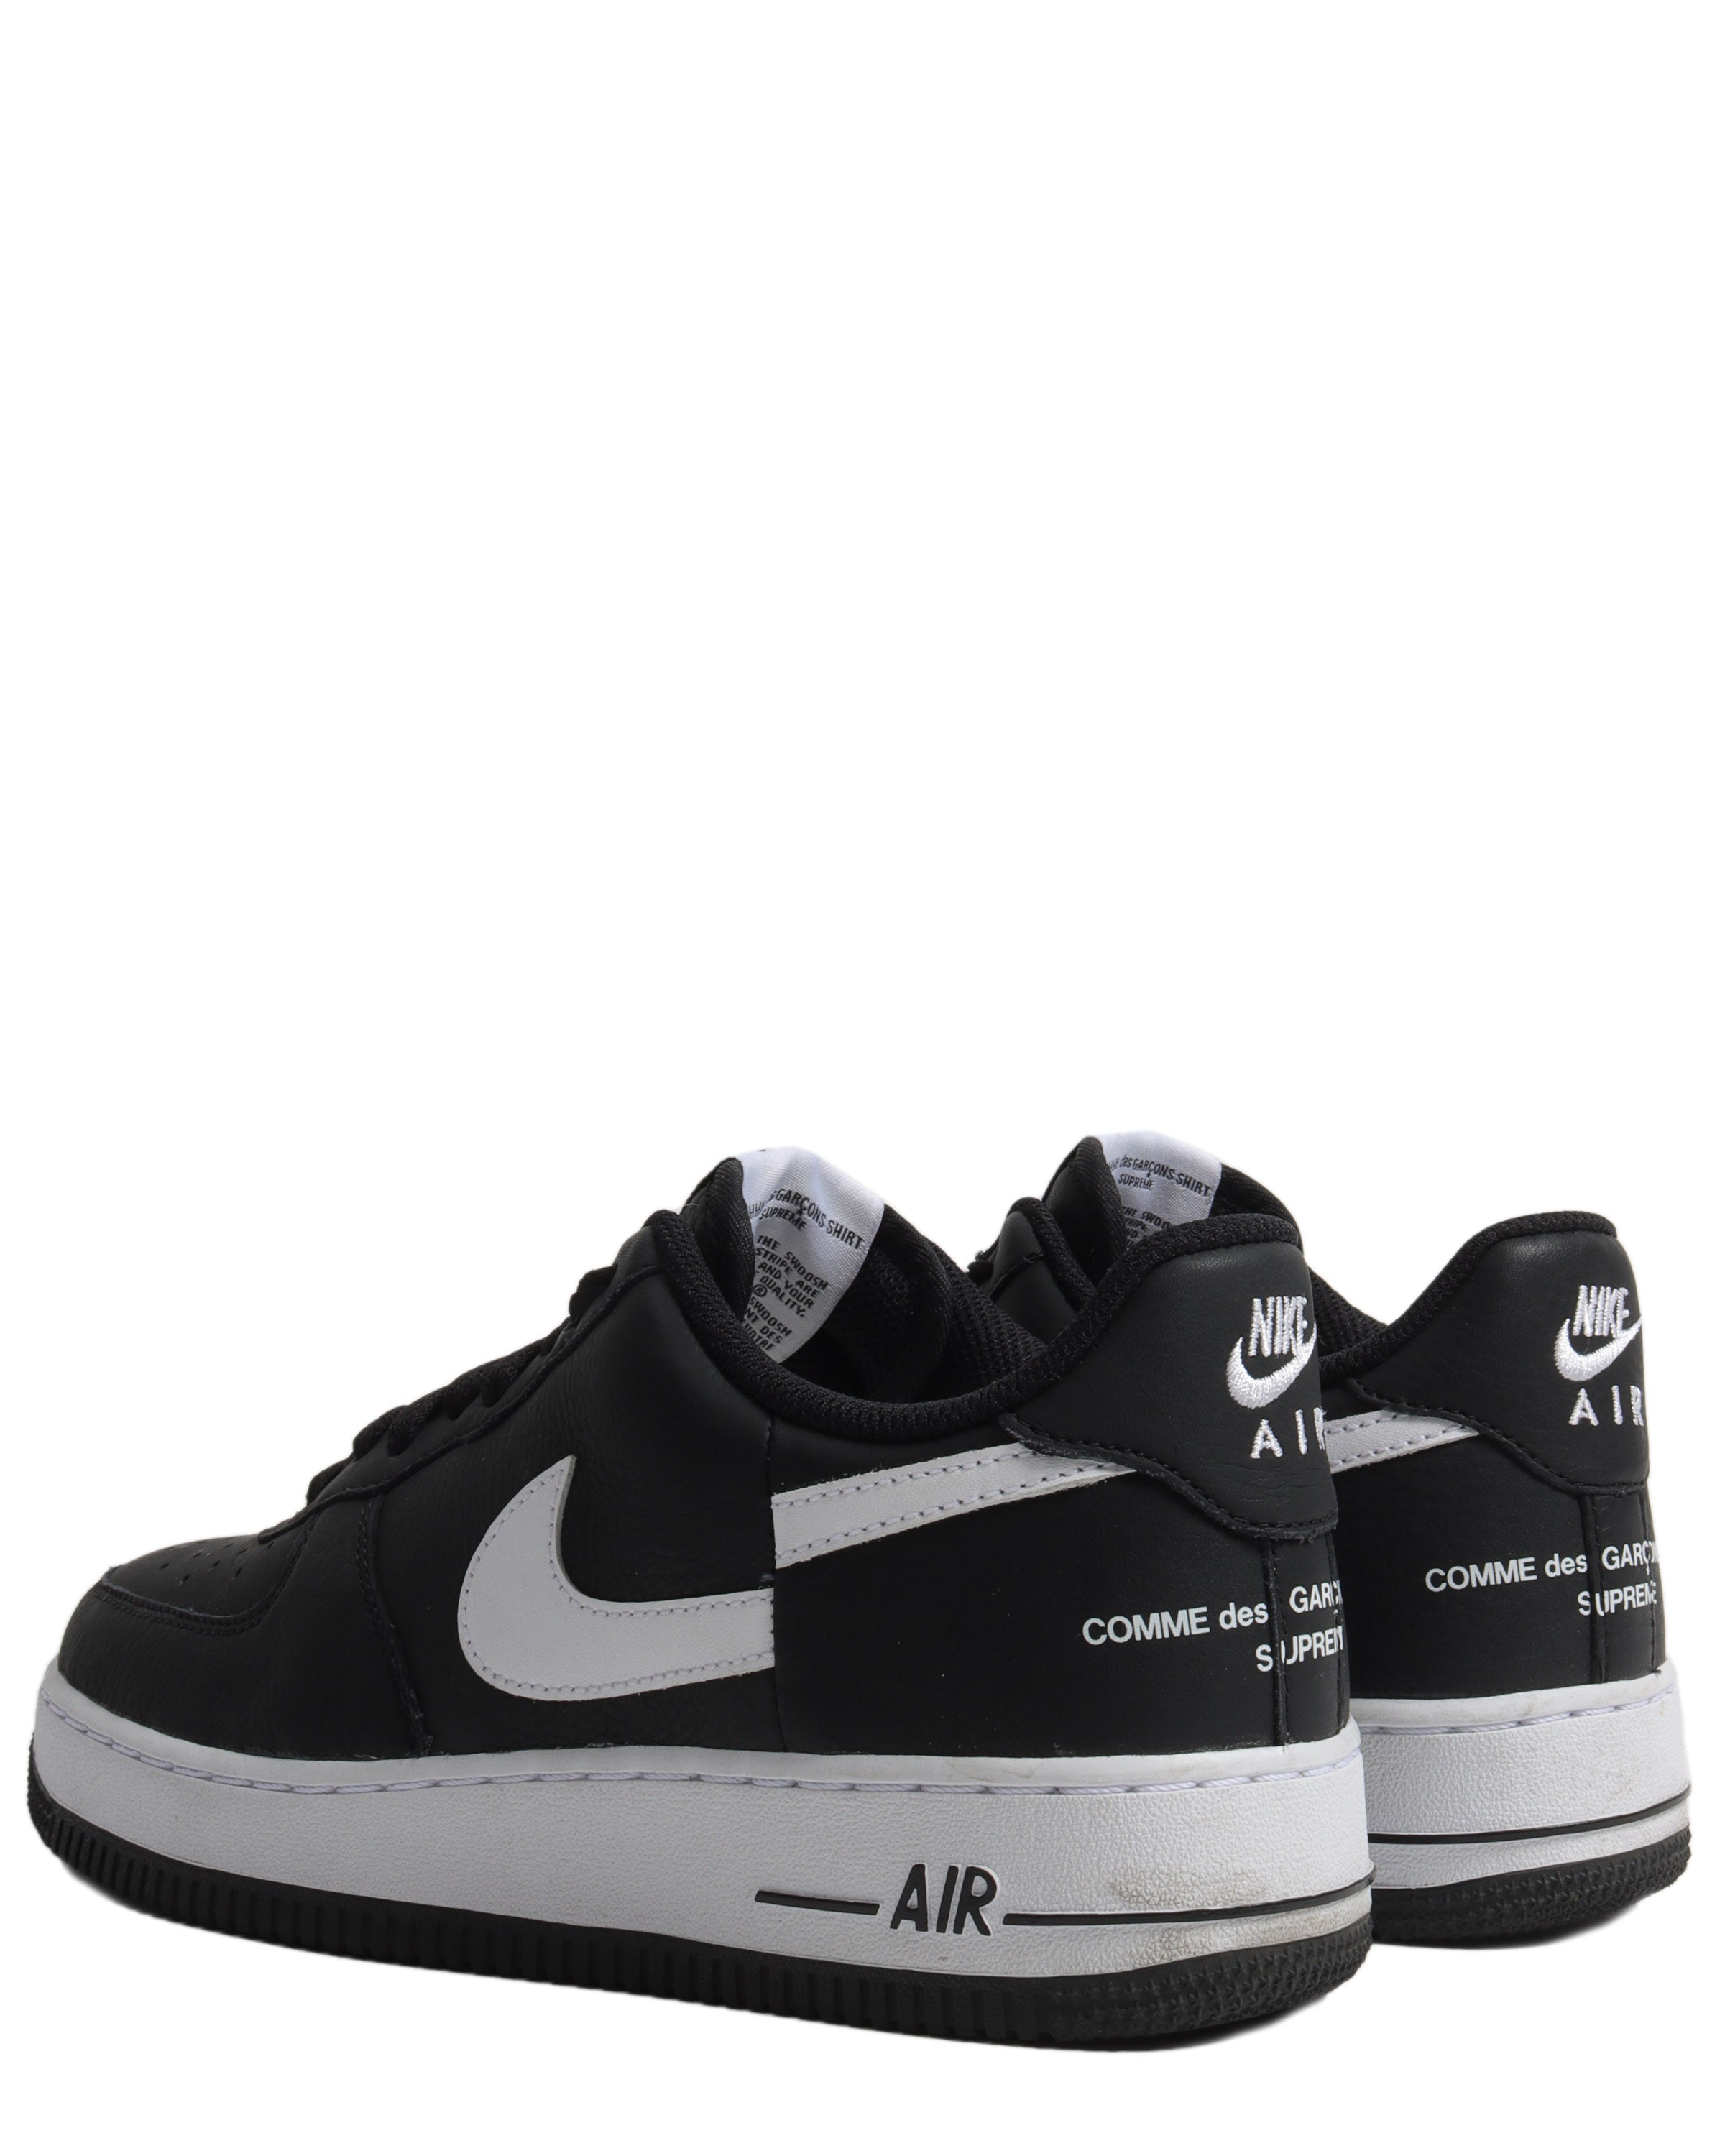 Supreme X Nike Air Force 1 Low Black